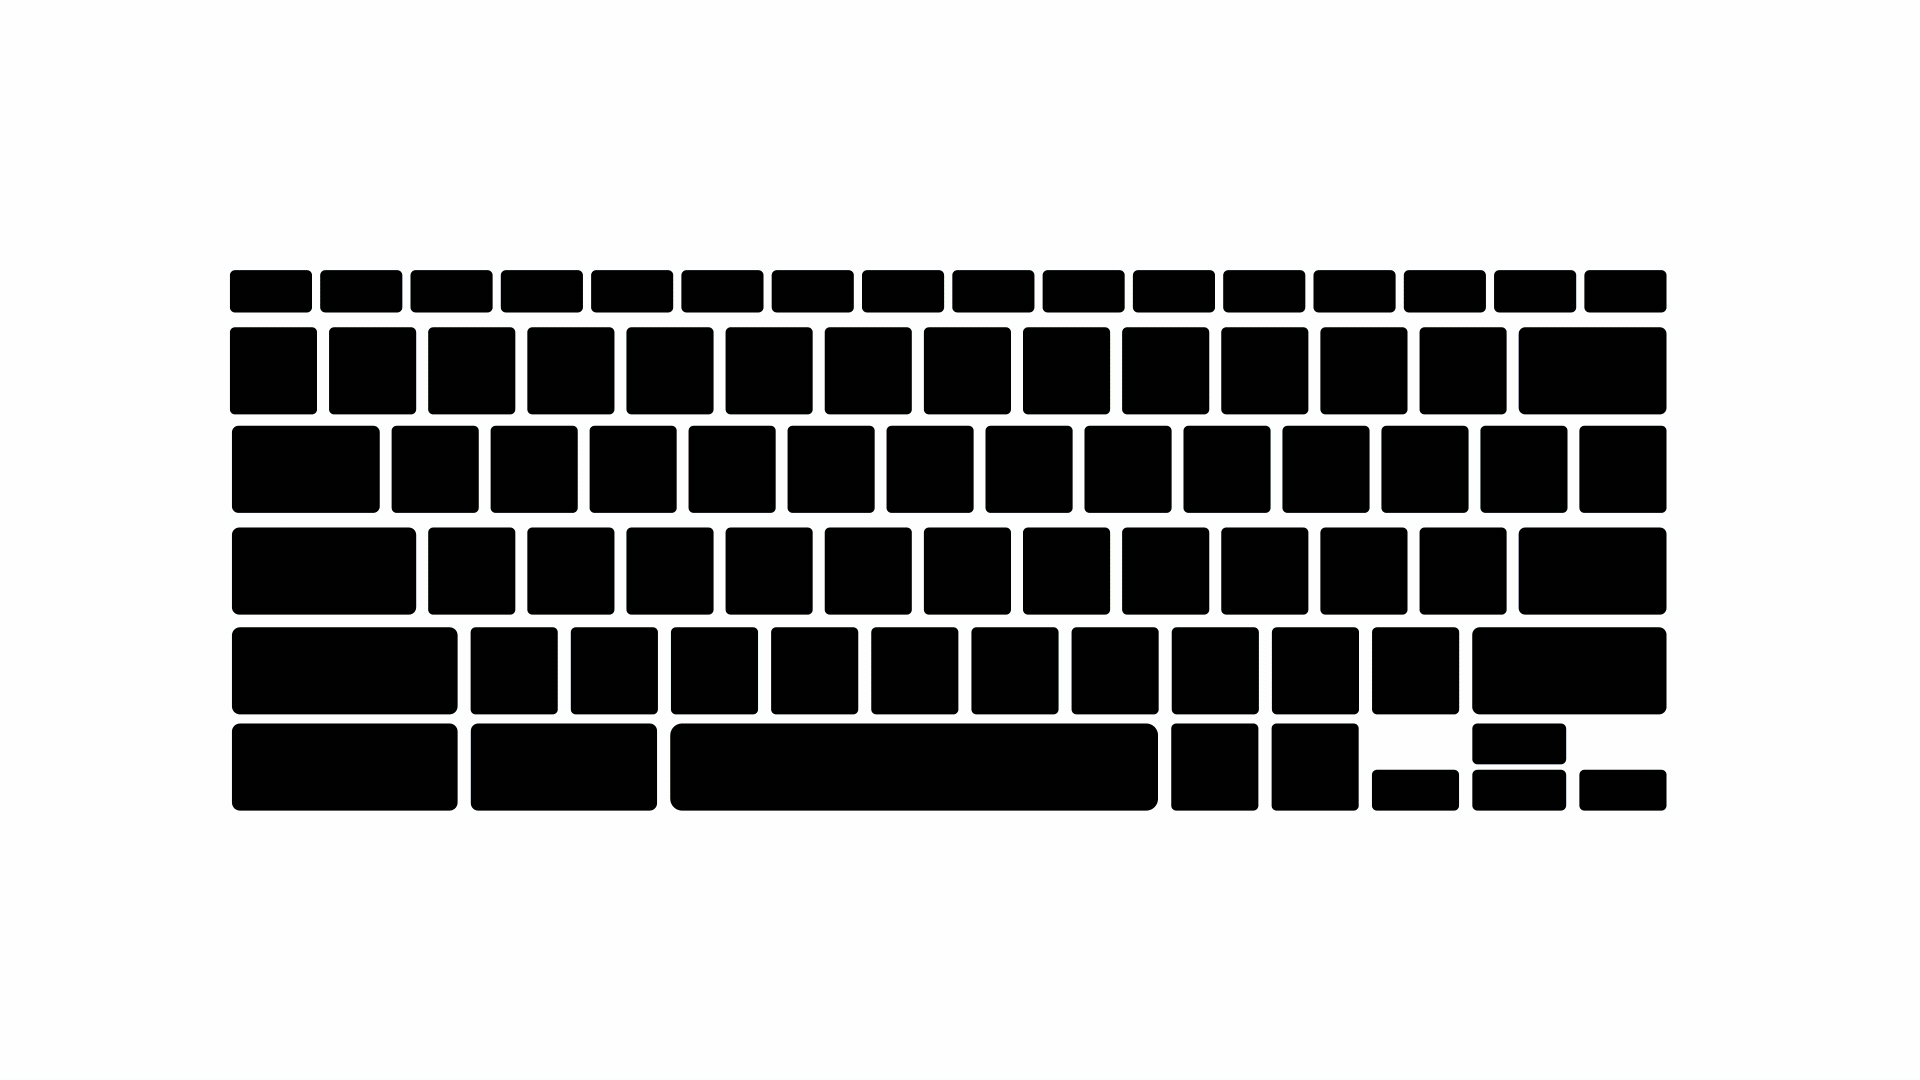 Keyboard Asus Tidak Berfungsi. Menggunakan keyboard Chromebook